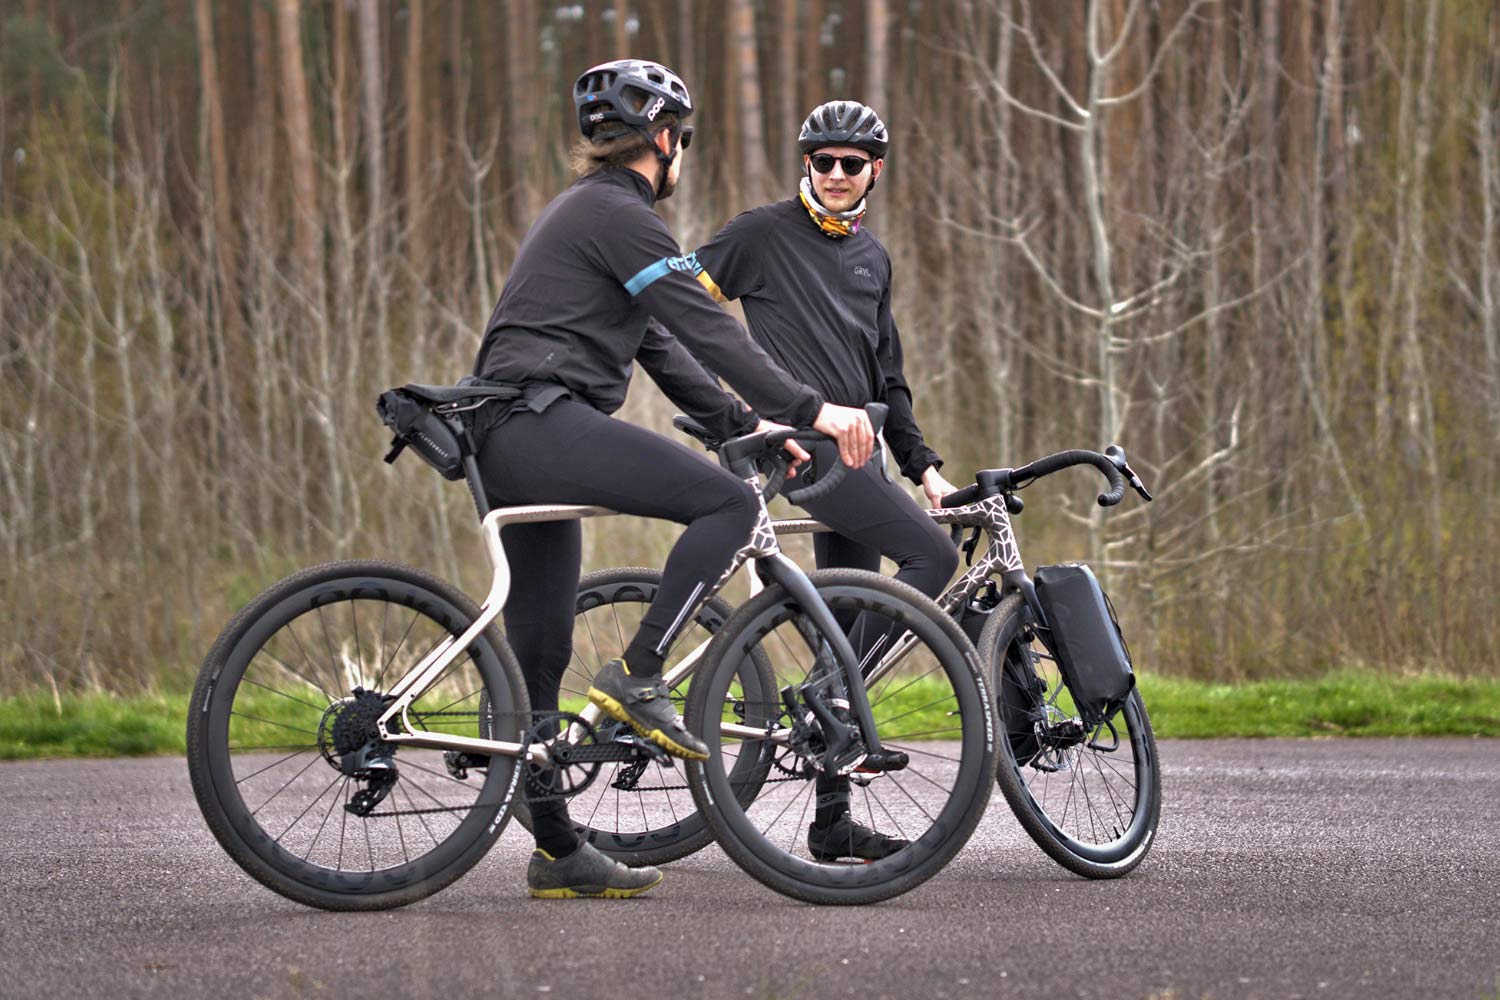 Urwahn Acros EDT gravel bike, limited edition 3D-printed steel no-seattube gravel road adventure bike, options